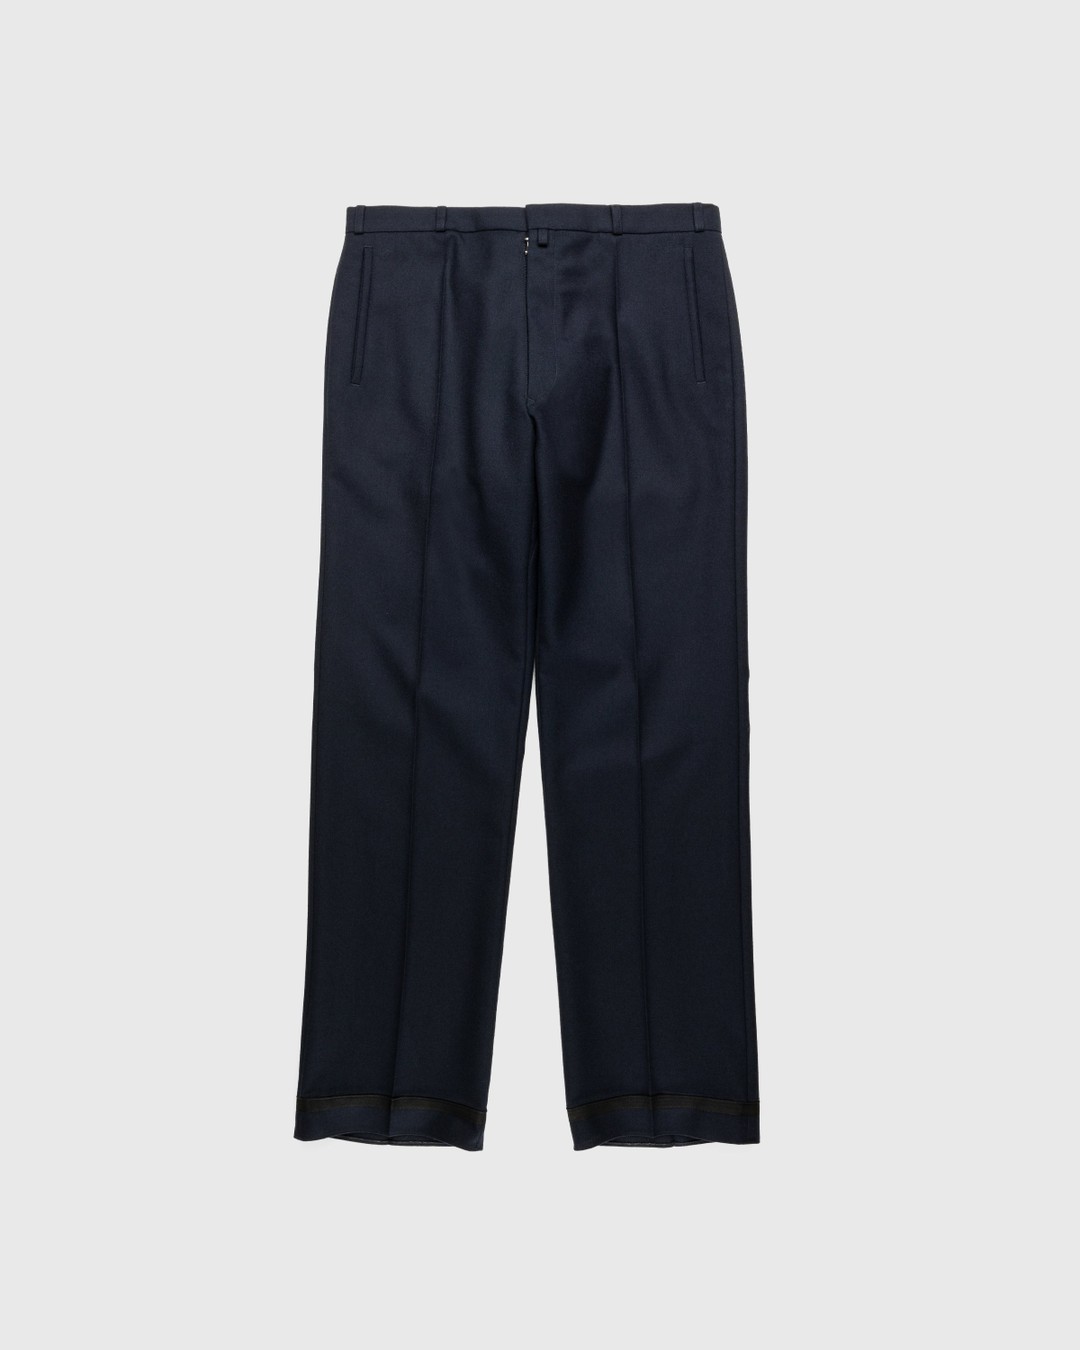 Maison Margiela – Wool Twill Trousers Navy - Trousers - Blue - Image 1